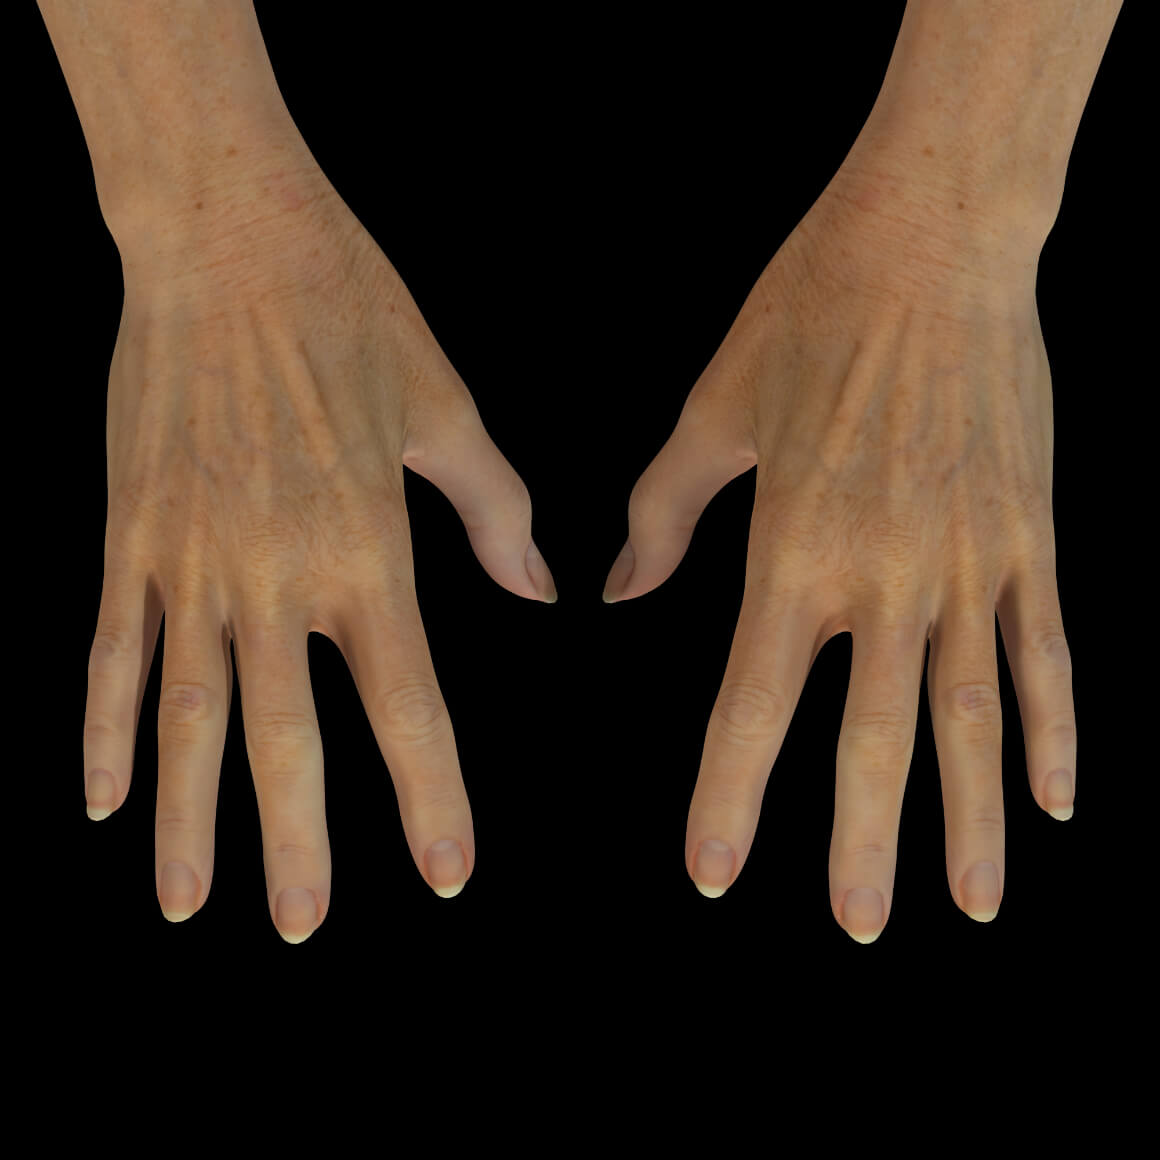 Hands of a Clinique Chloé female patient after an IPL photorejuvenation treatment to remove dark spots